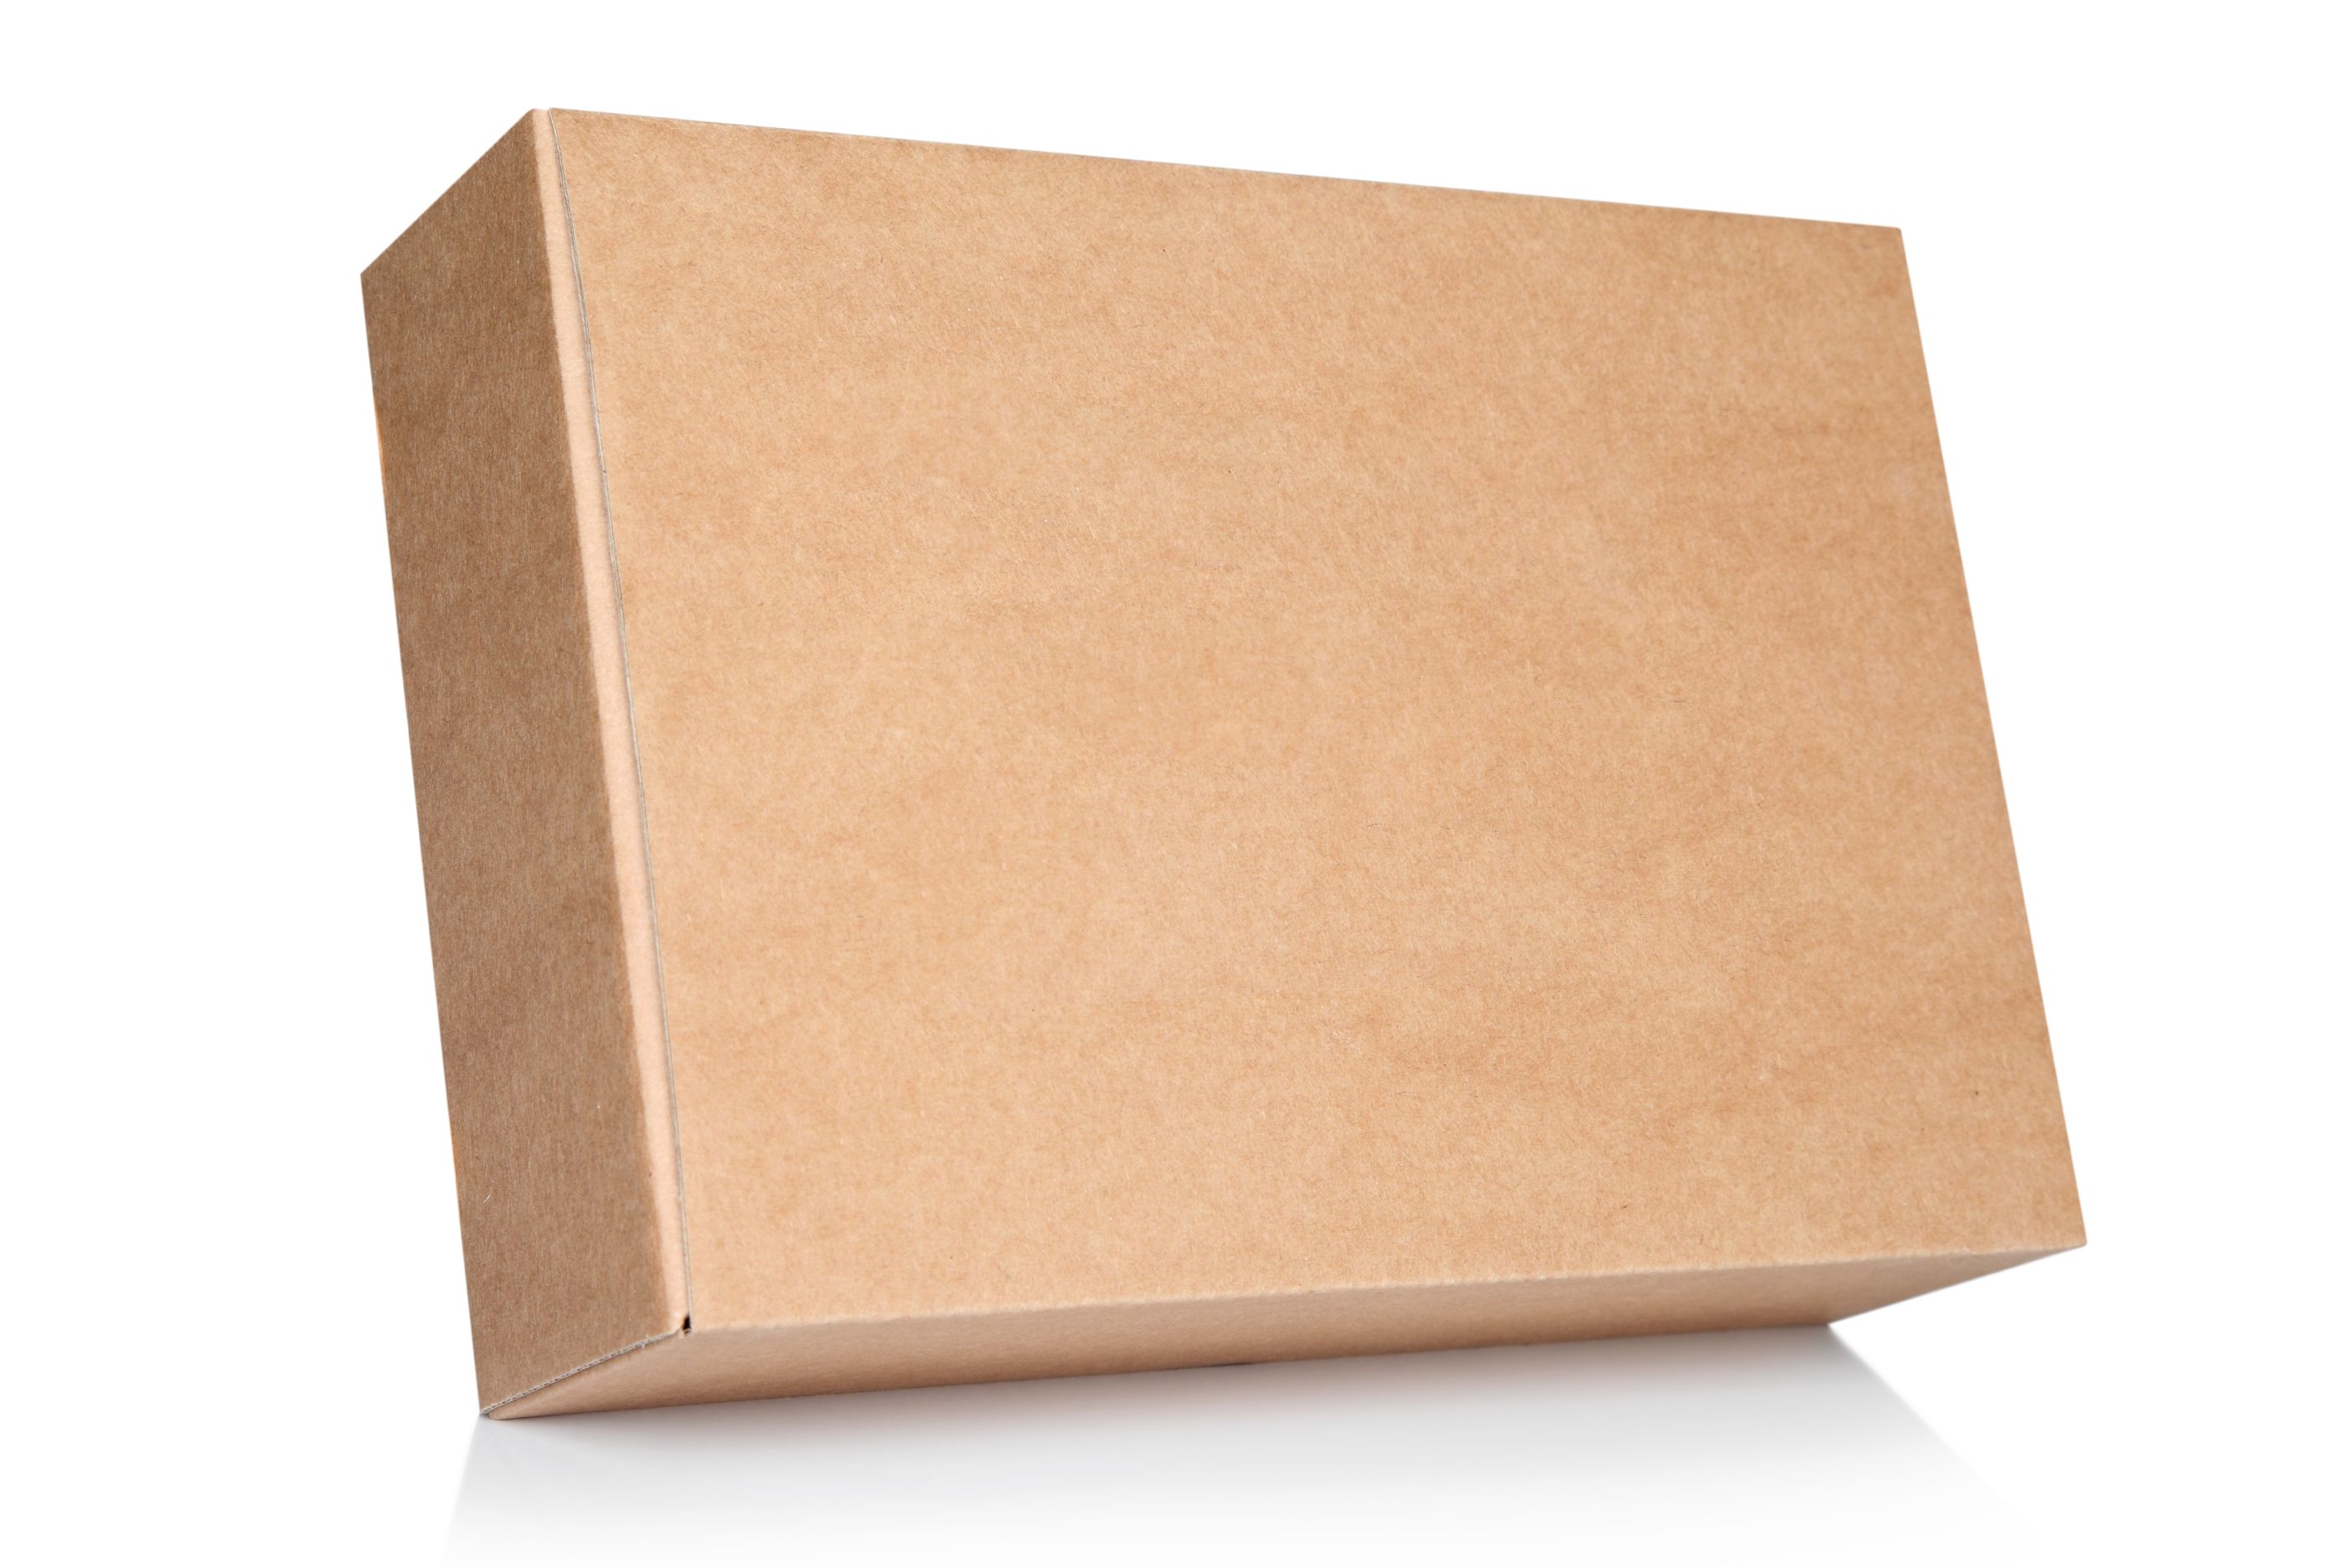 Boxes - Paper